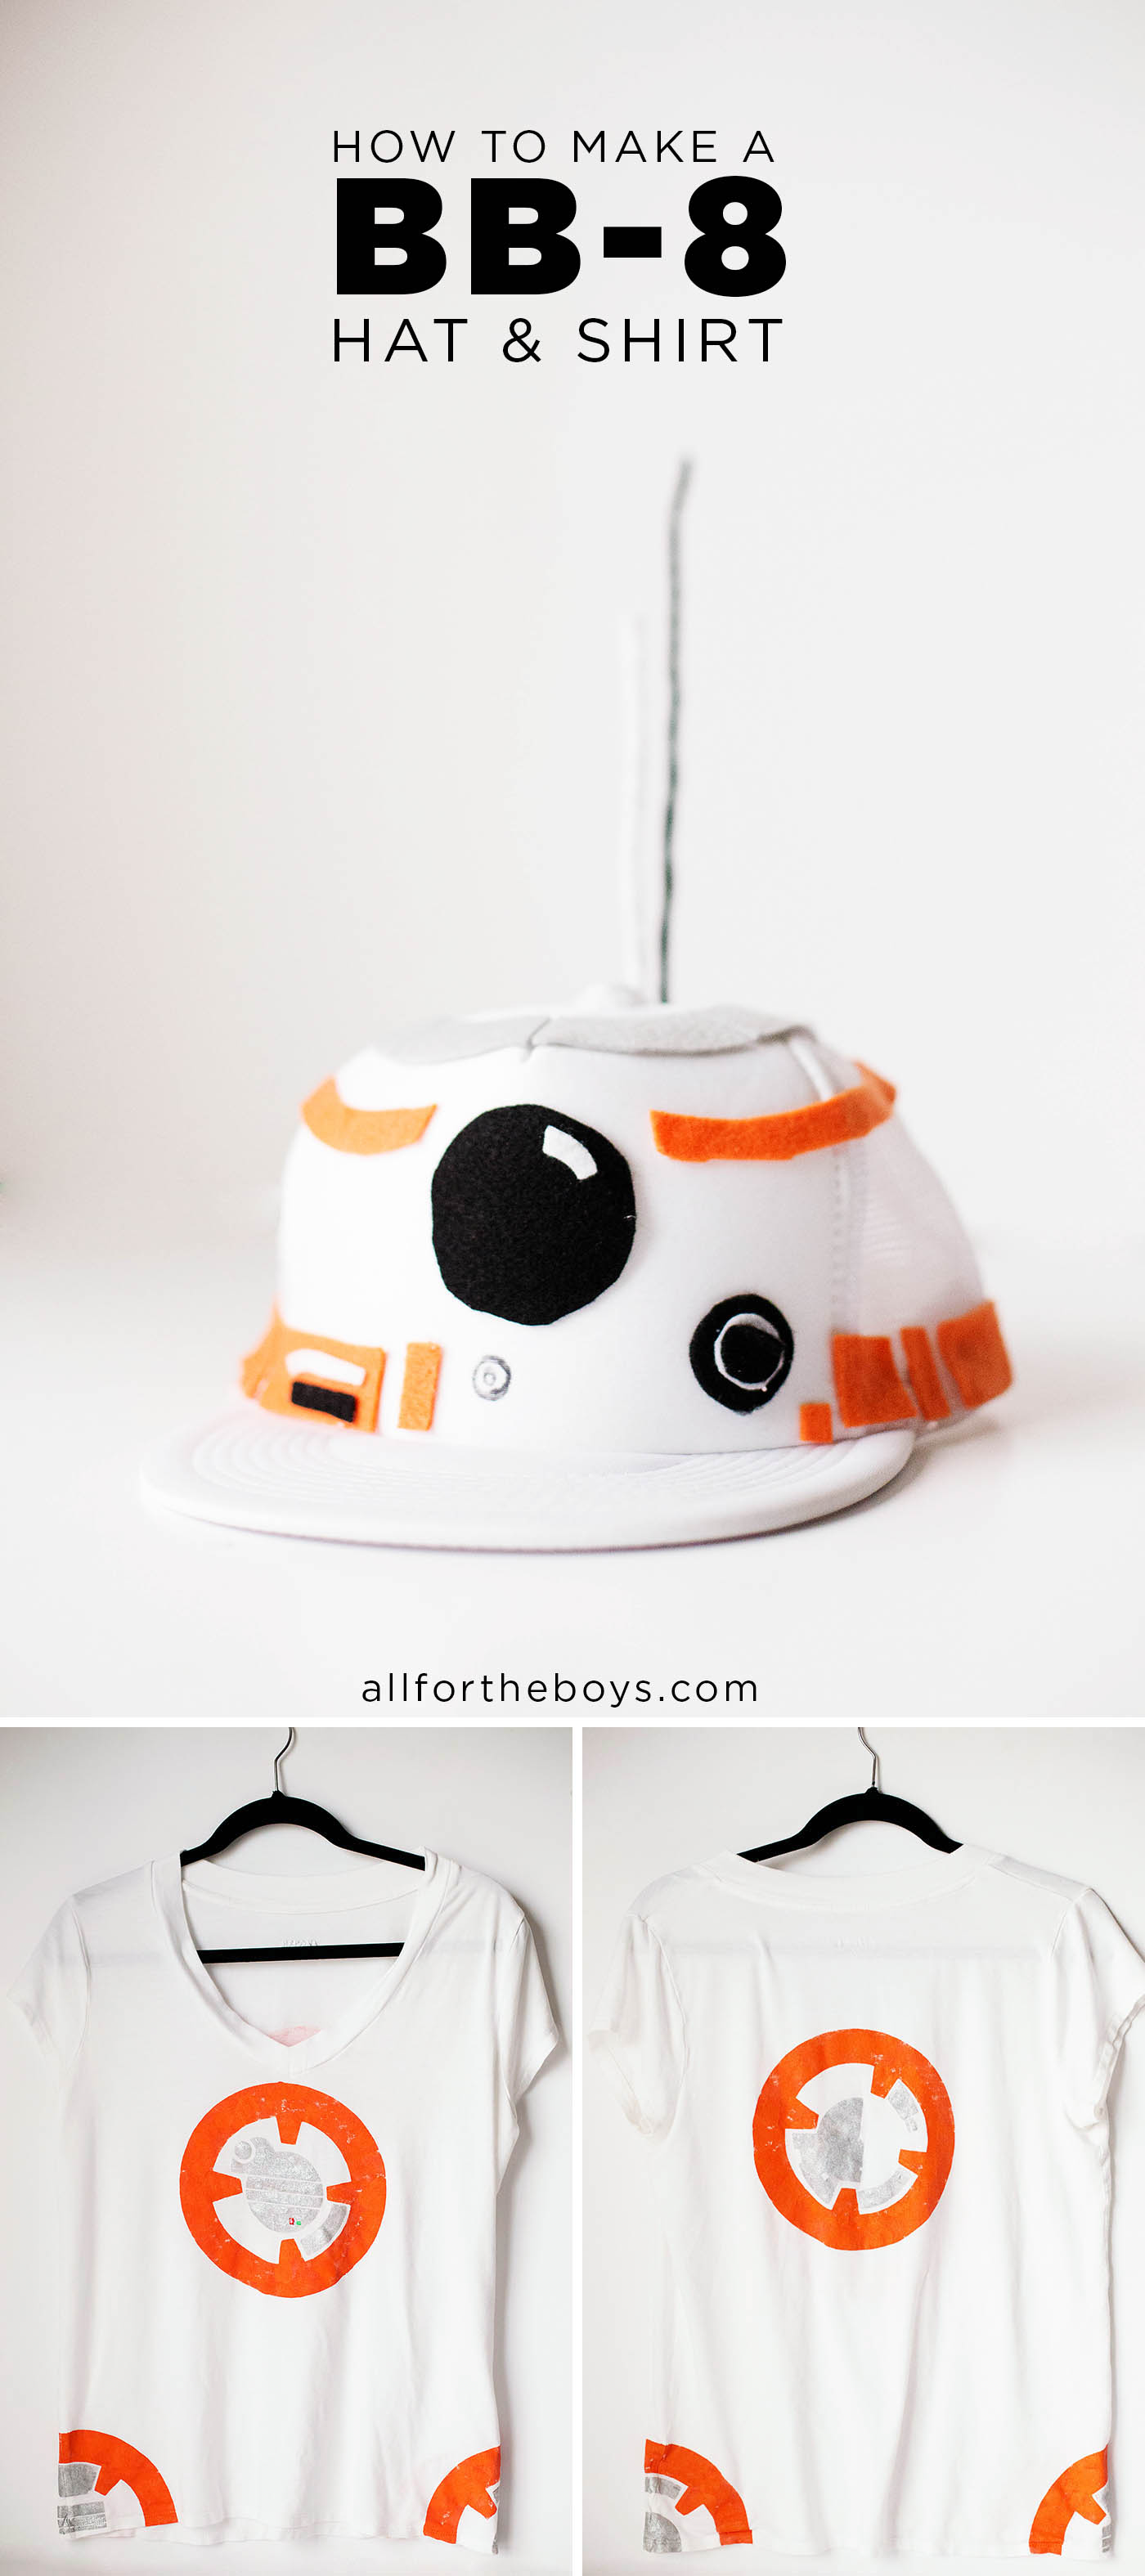 DIY BB-8 Droid hat & shirt costume. Perfect for a Star Wars Run Disney costume, halloween or just a trip to Disneyland or Walt Disney World!